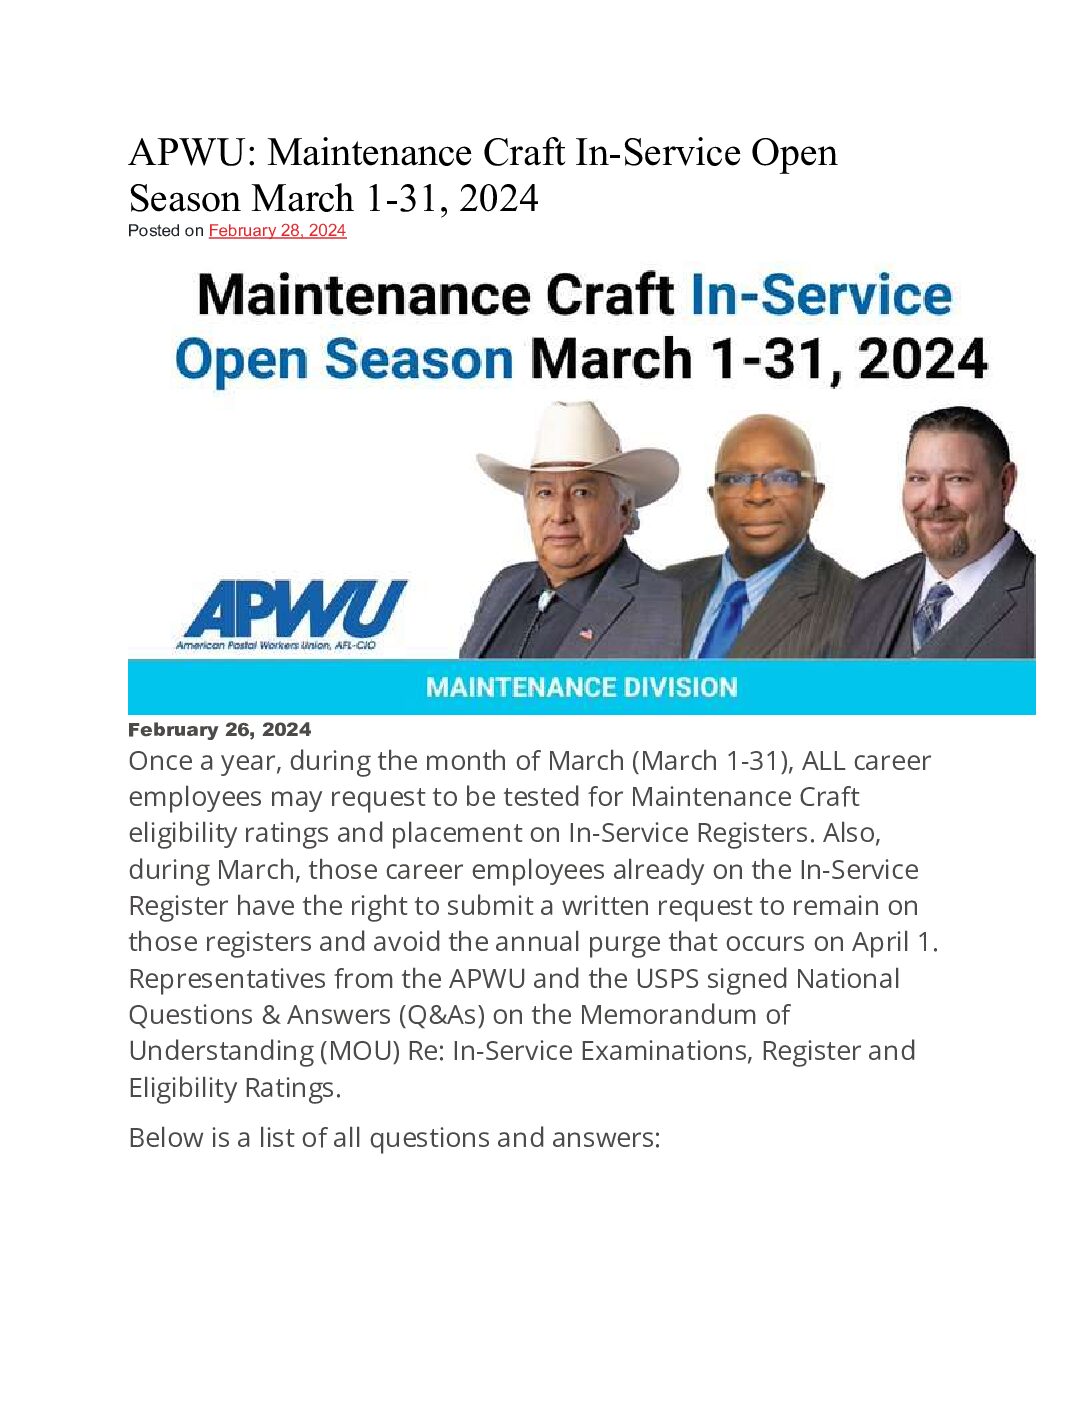 APWU Maintenance Craft In-Service Open Season March 1-31, 2024 - 